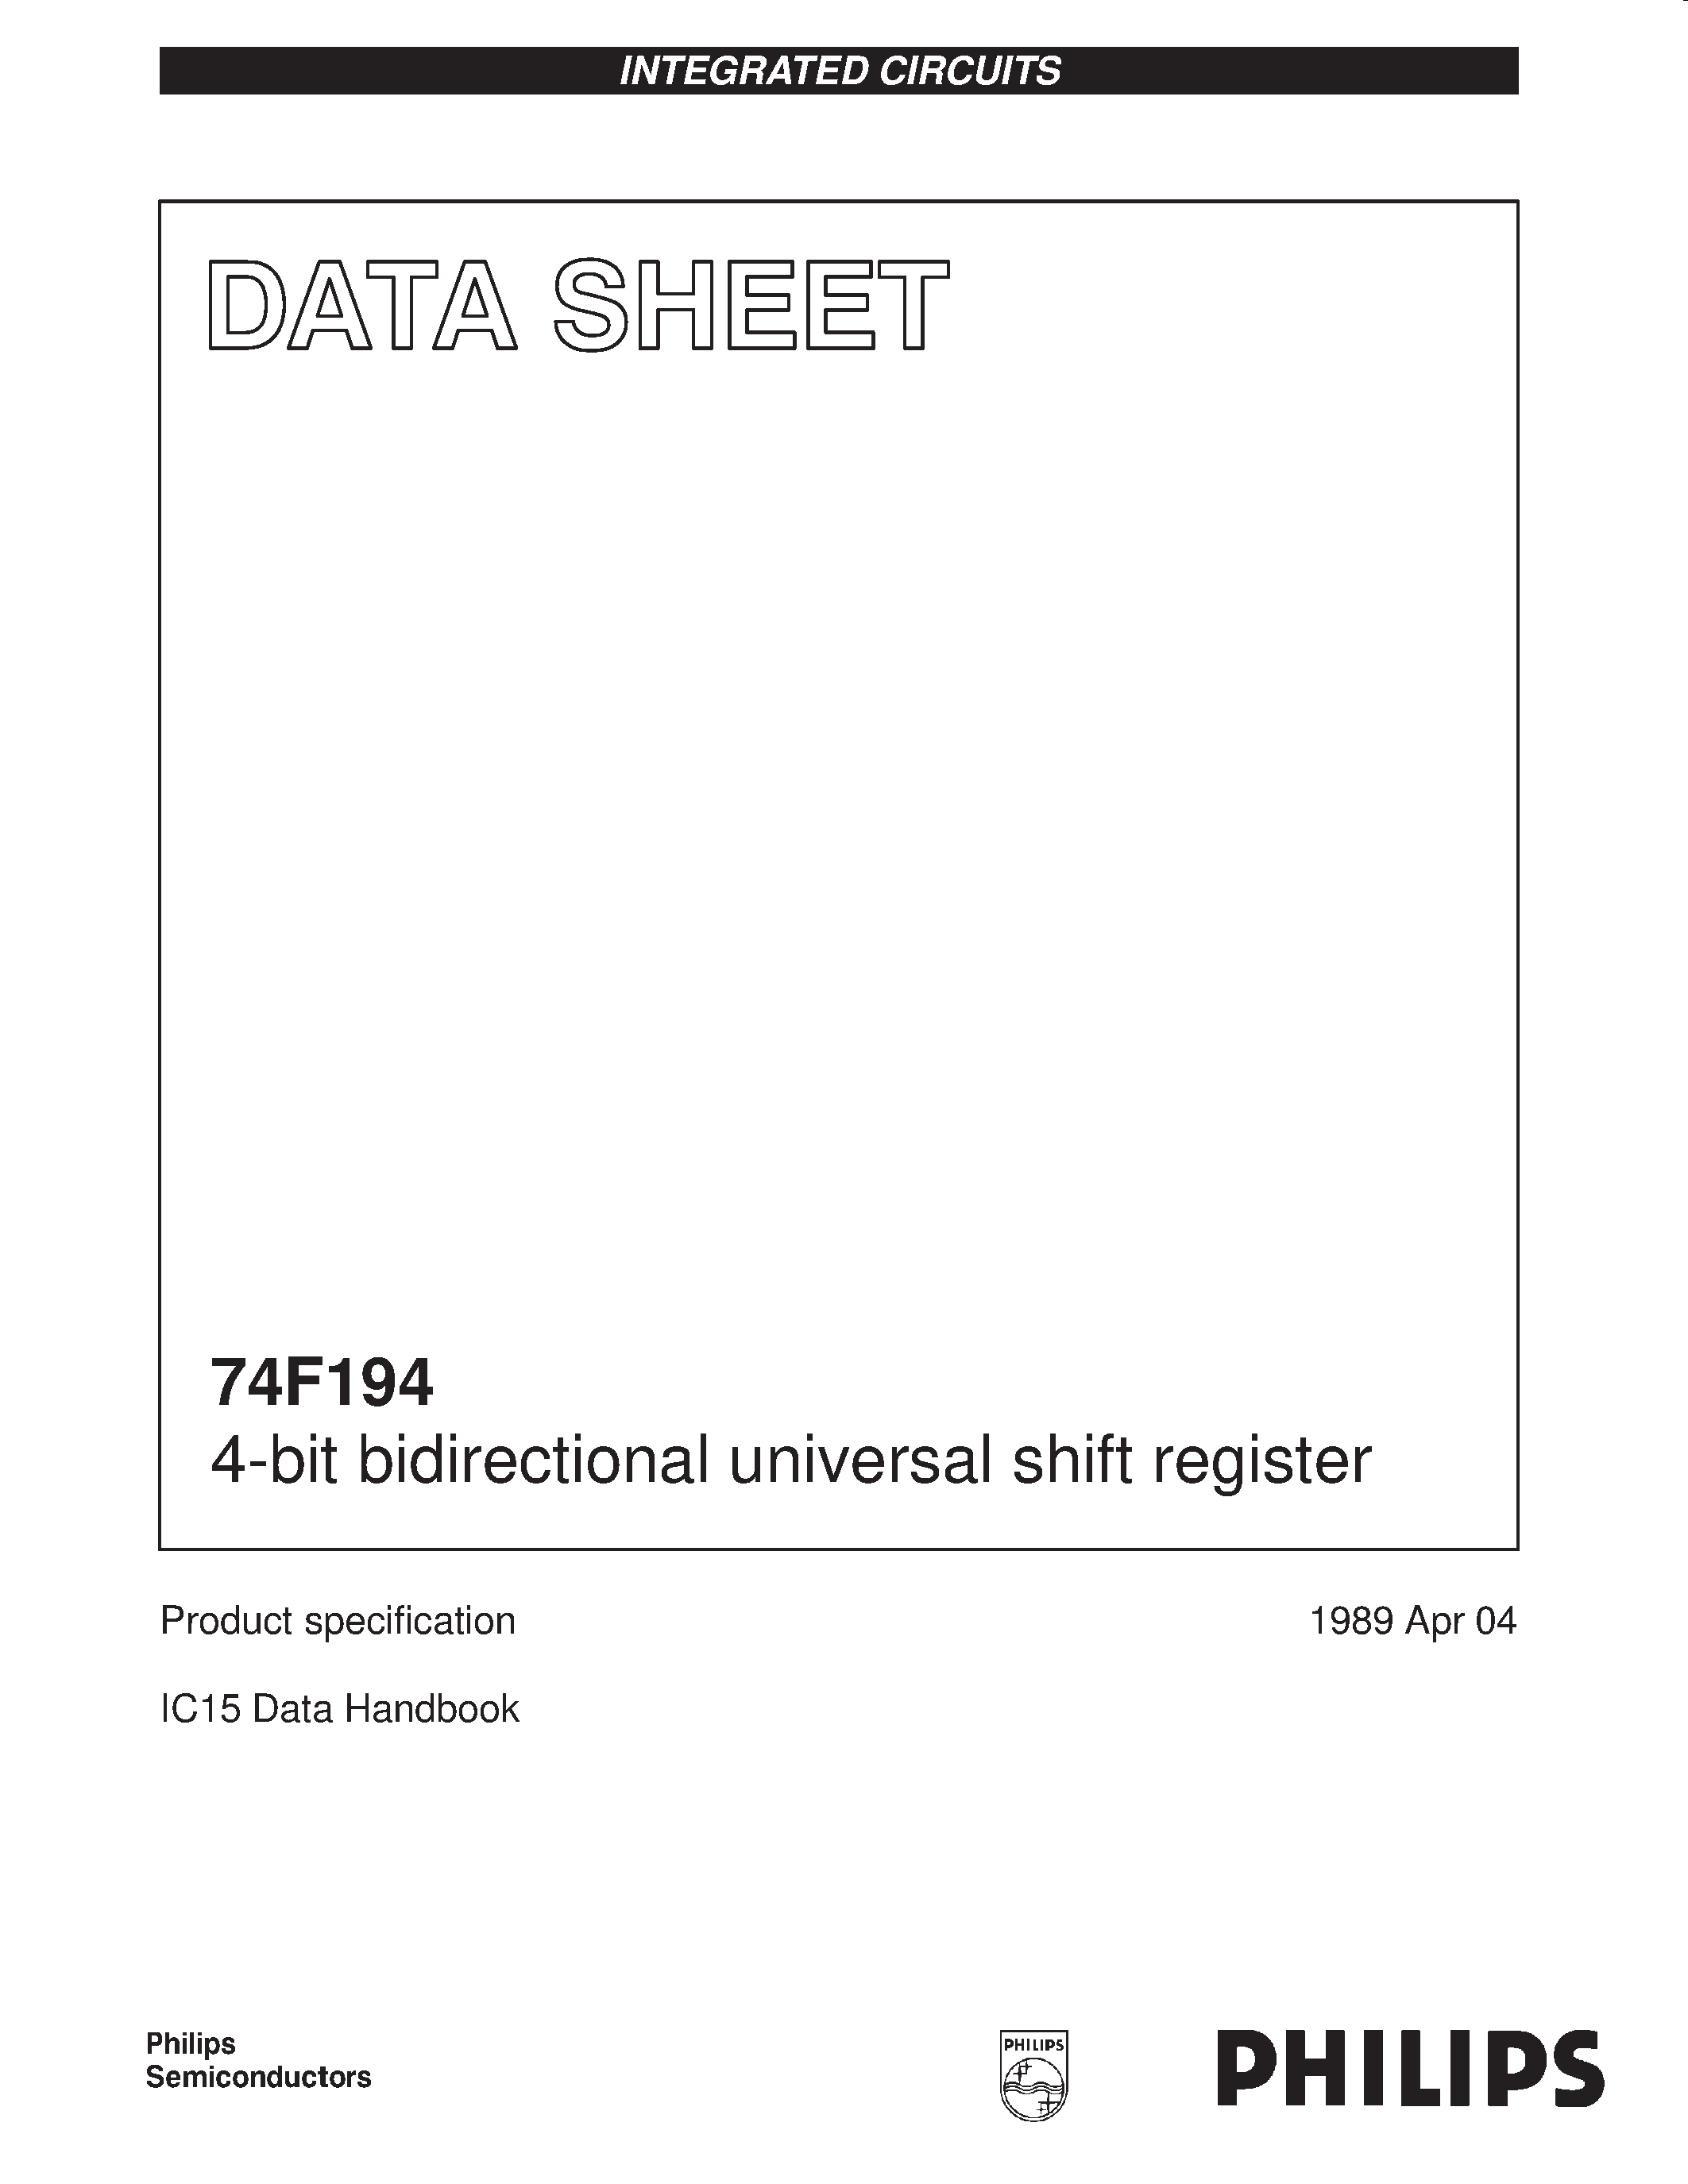 Datasheet 74F194 - 4-bit bidirectional universal shift register page 1